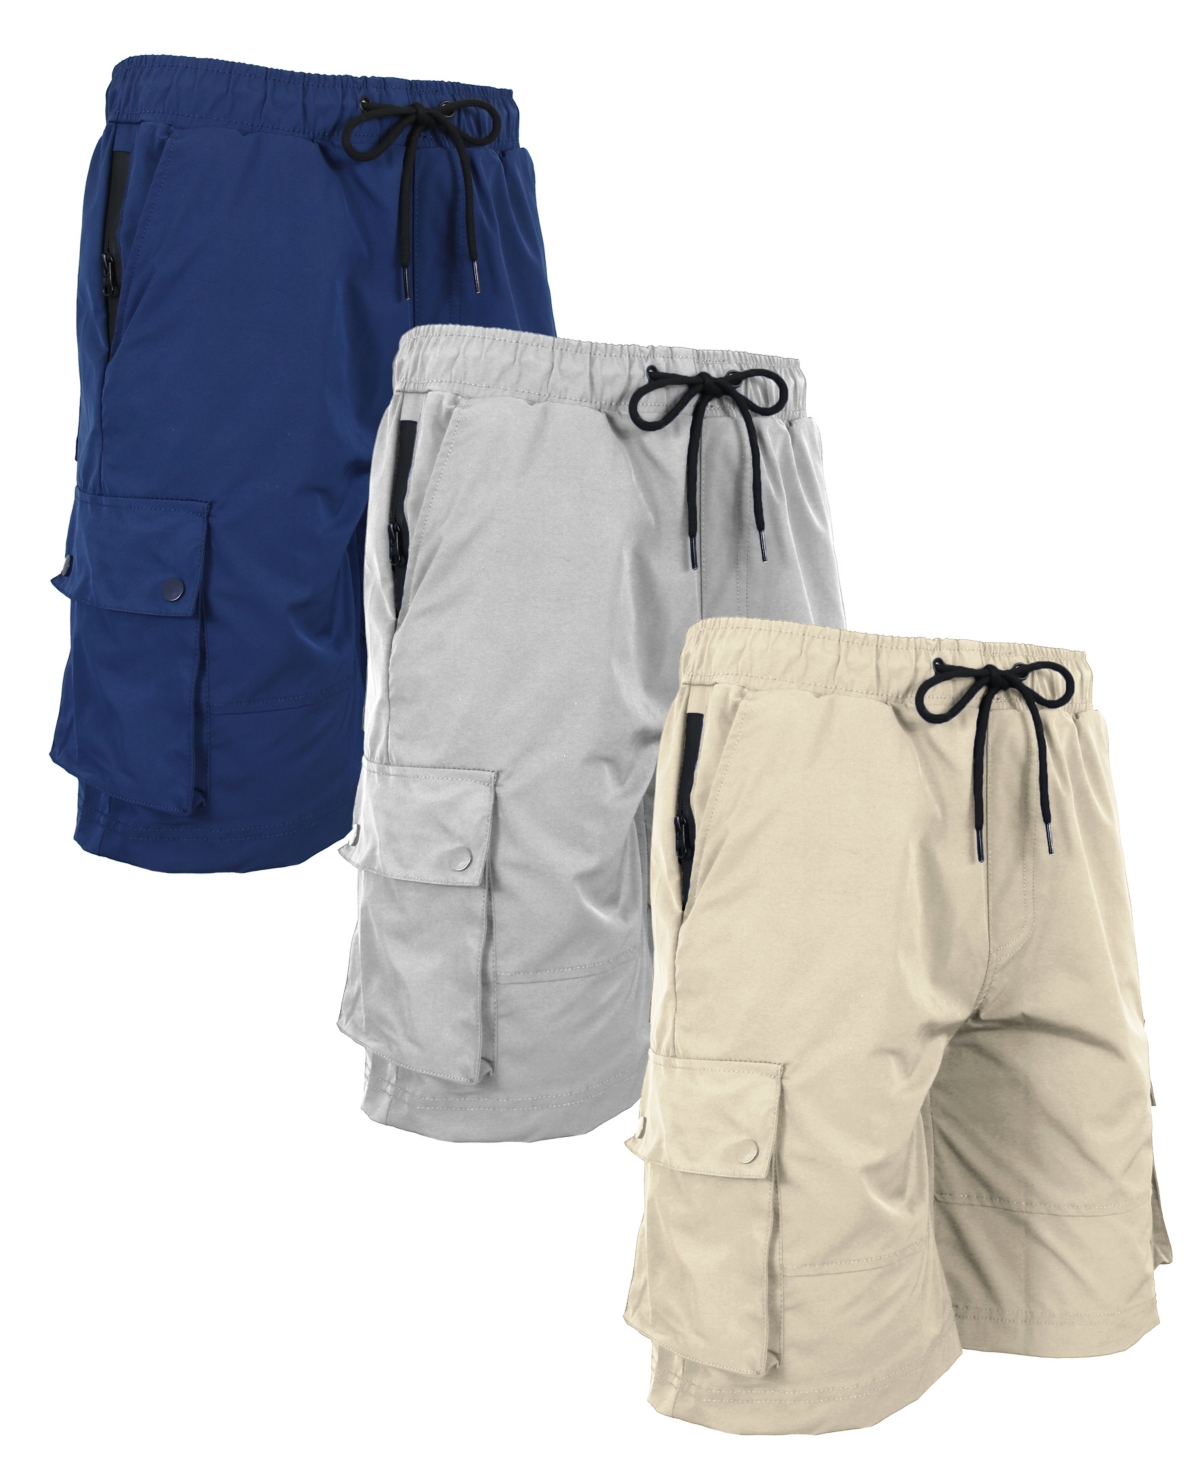 Men's Moisture Wicking Performance Quick Dry Cargo Shorts-3 Pack - NAVY-LIGHT BLUE-BLUE